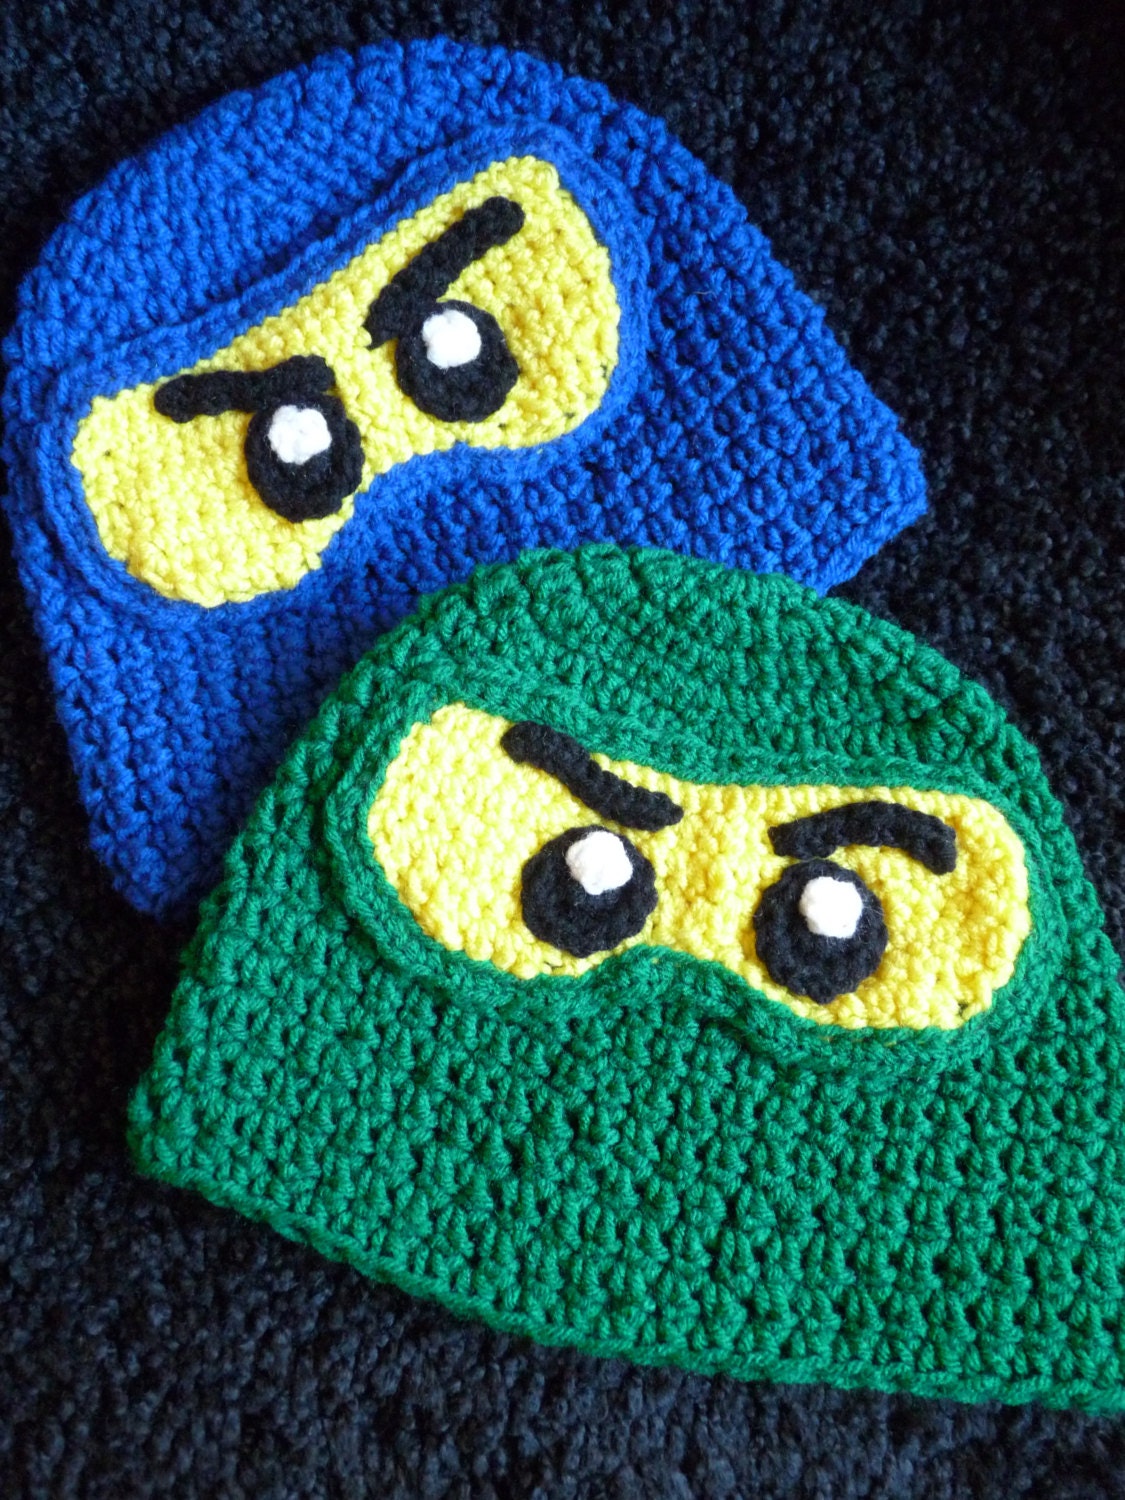 Ninja lego ninjago inspired crochet hat i can knit by SandrasGifts